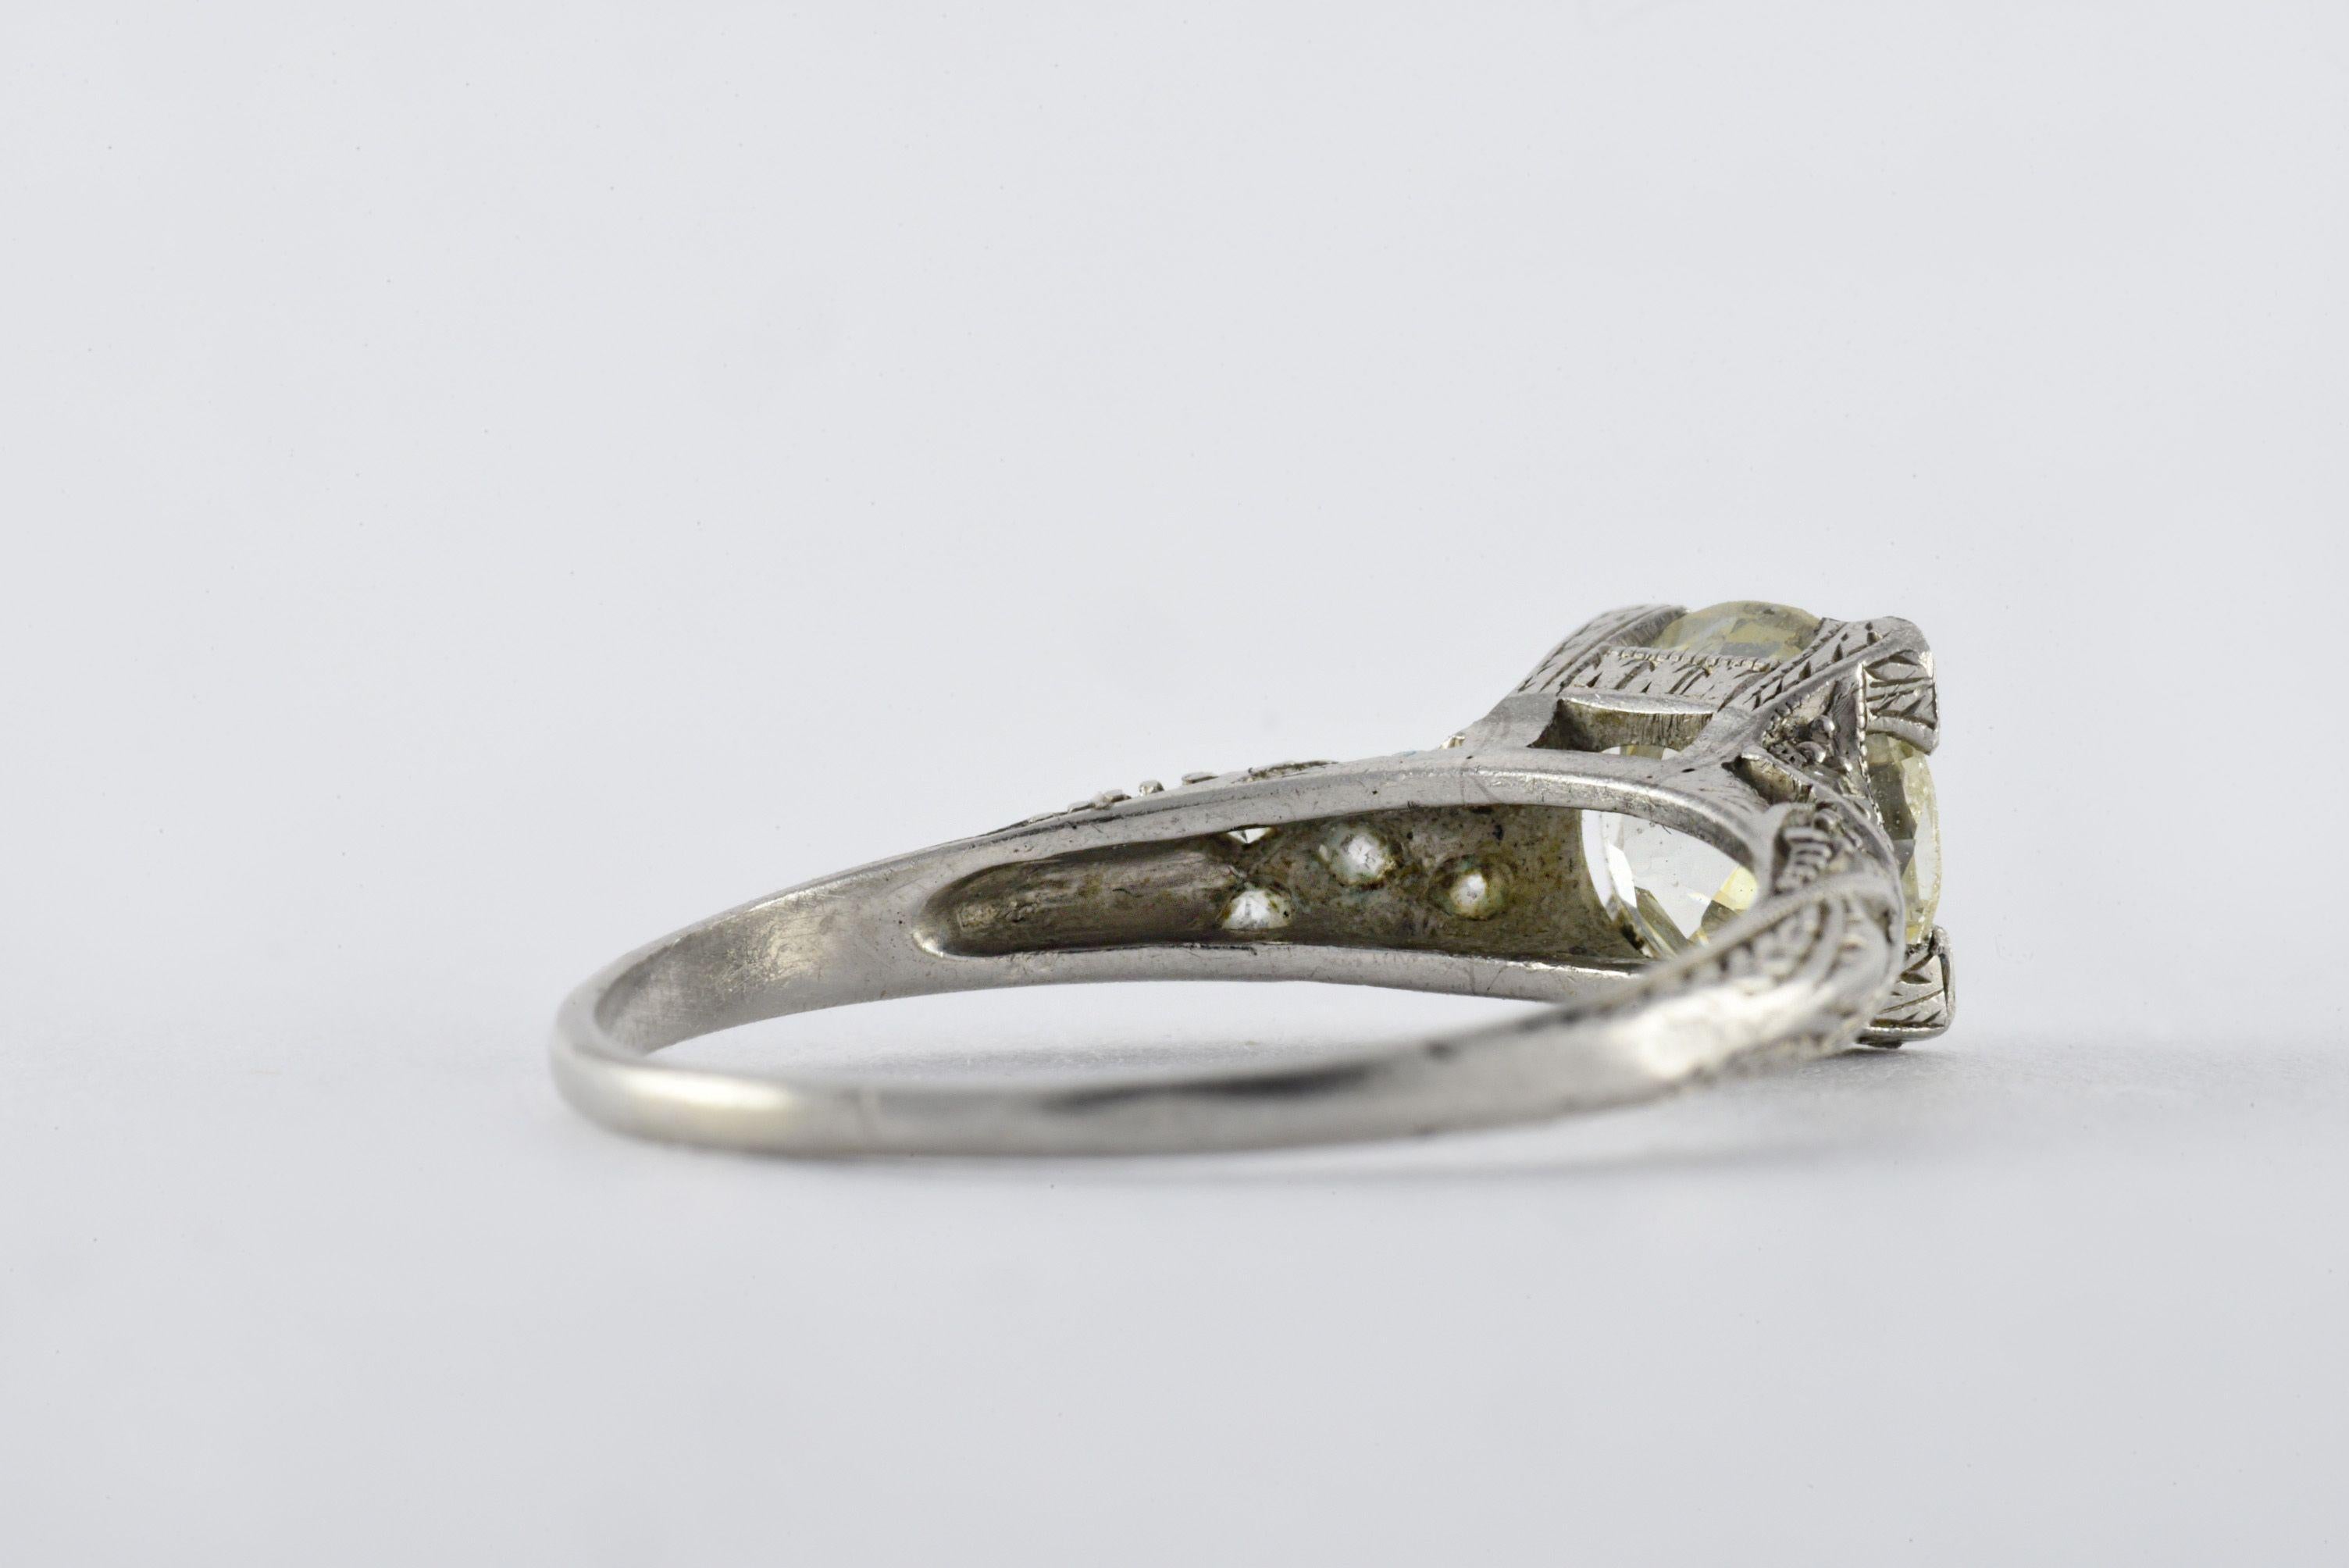 Art Deco Diamond and Platinum Ring For Sale 1